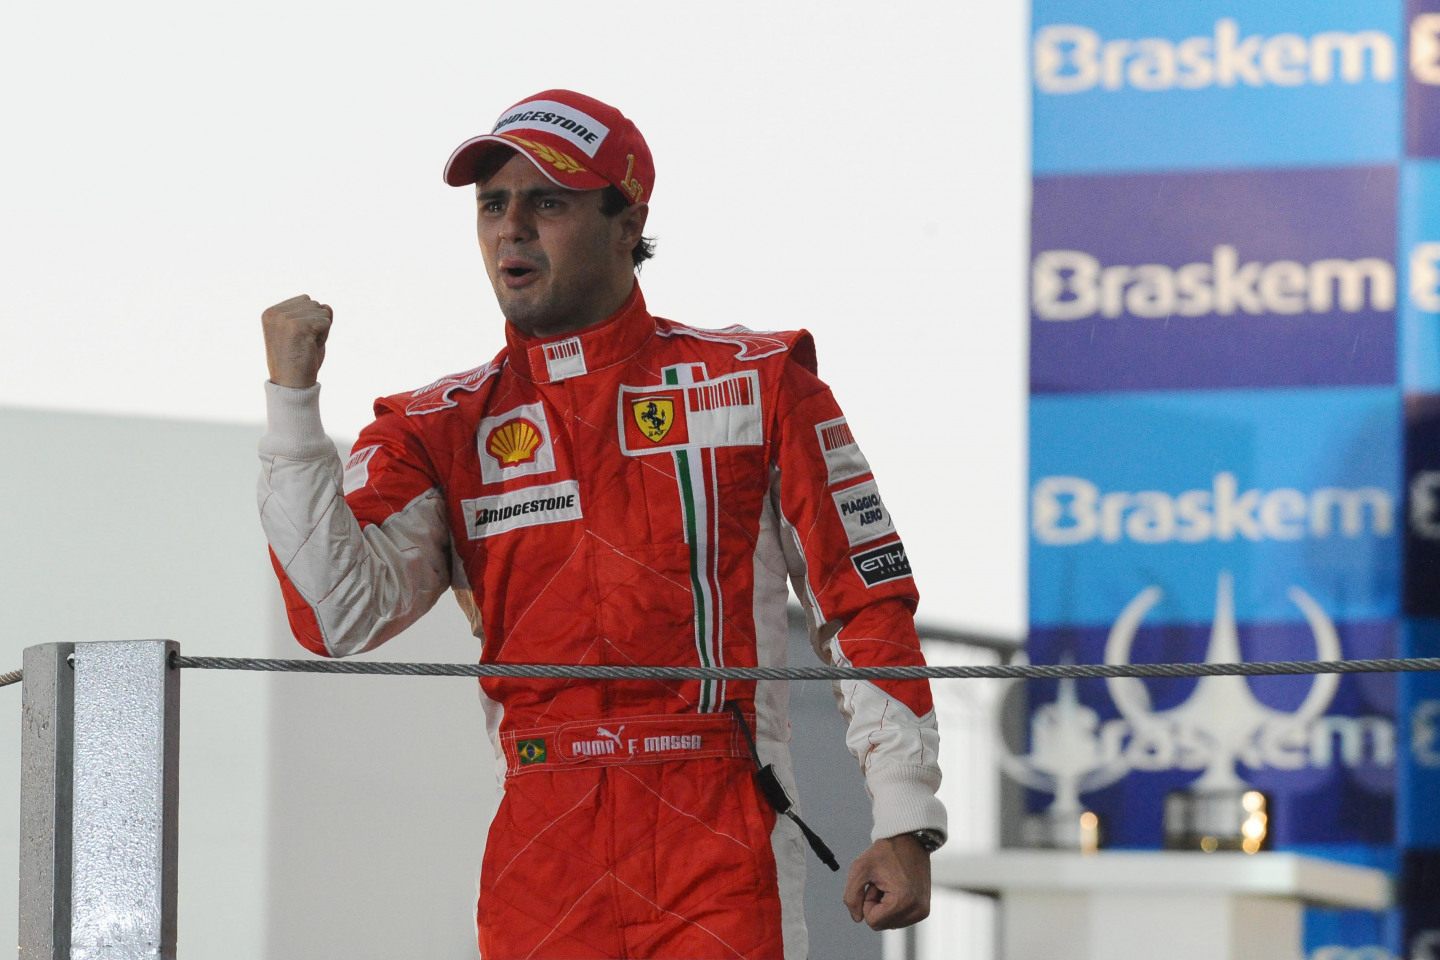 Фелипе Масса на подиуме Гран При Бразилии-2008 © Ferrari